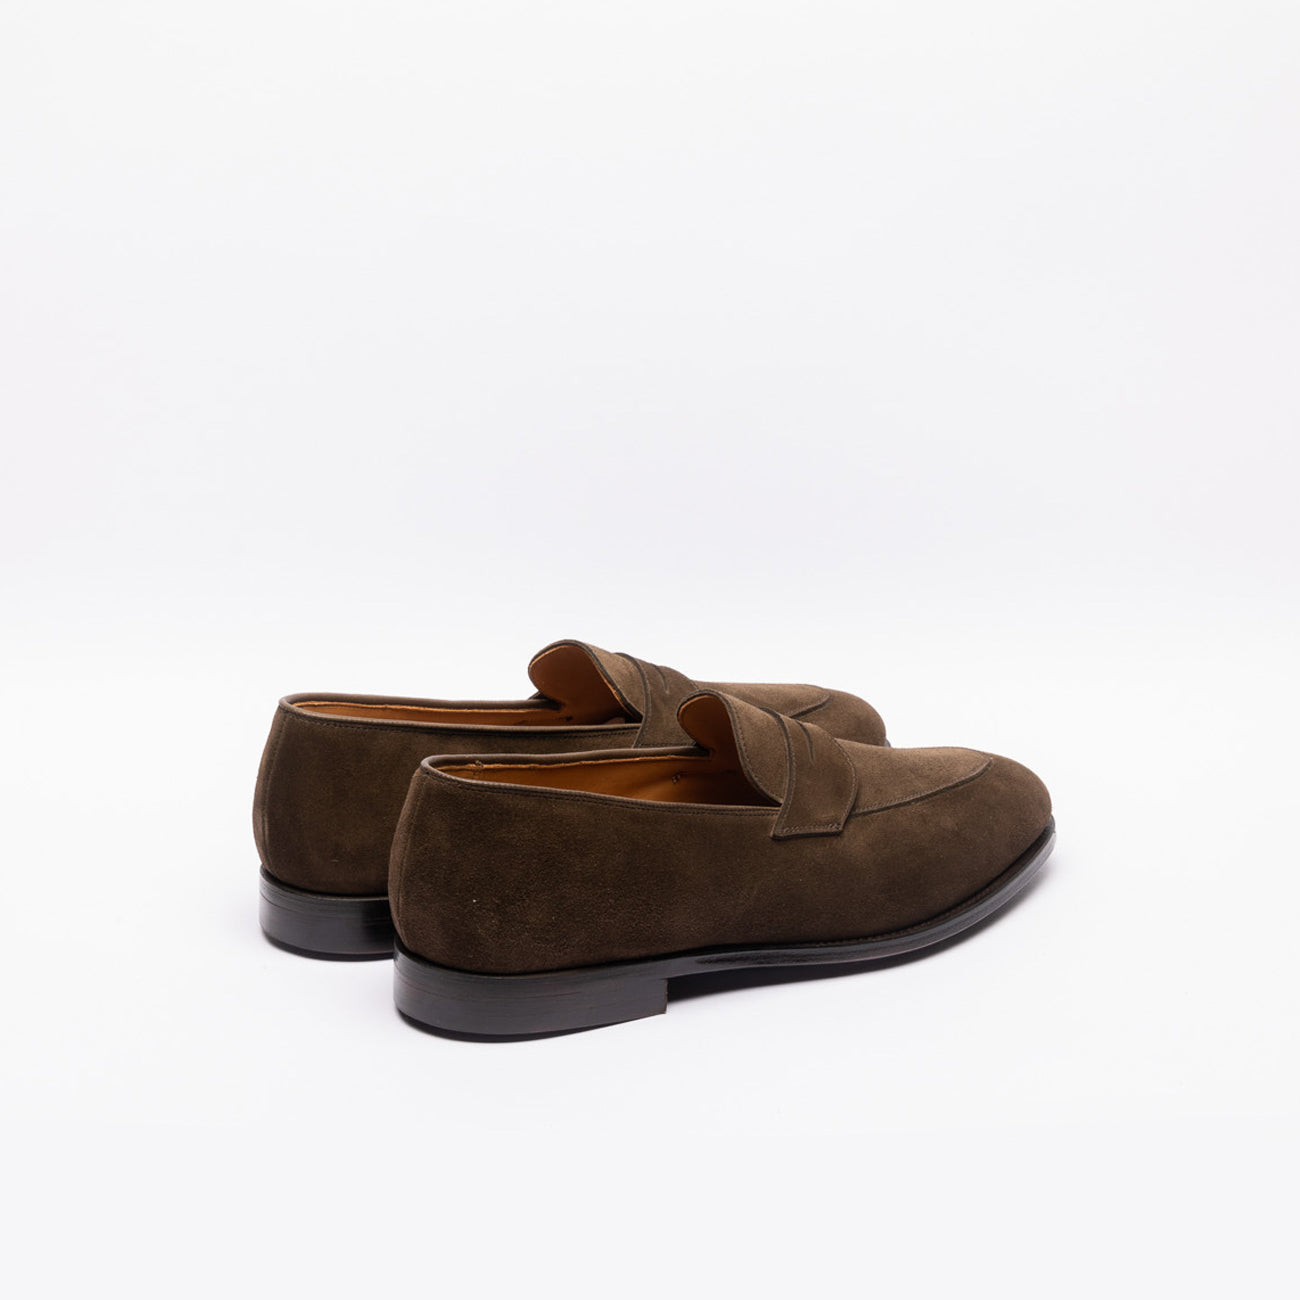 Crockett & Jones Nice penny loafers in brown suede